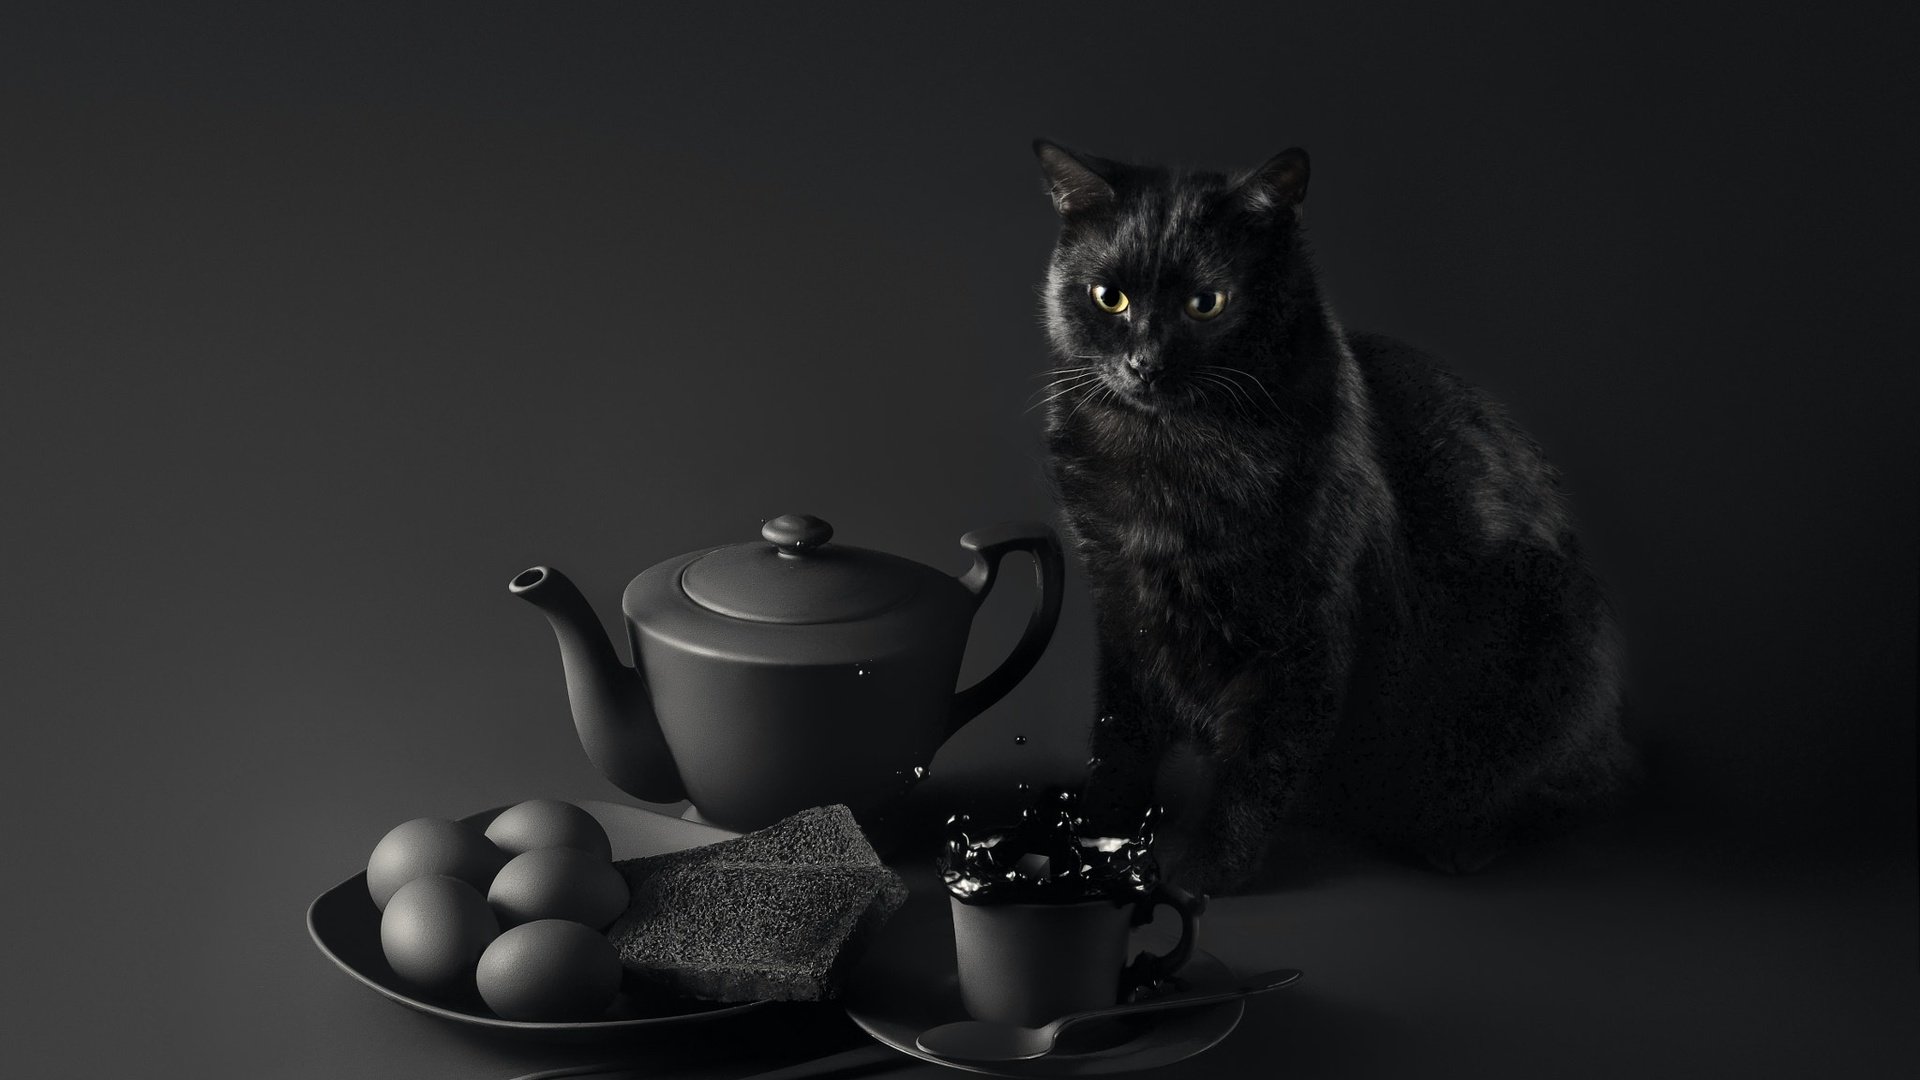 Обои завтрак, глаза, чёрная кошка, фон, sanket khuntale, мордочка, кошка неудачи, усы, кошка, взгляд, черный, стол, breakfast, eyes, black cat, background, muzzle, cat failures, mustache, cat, look, black, table разрешение 2048x1438 Загрузить